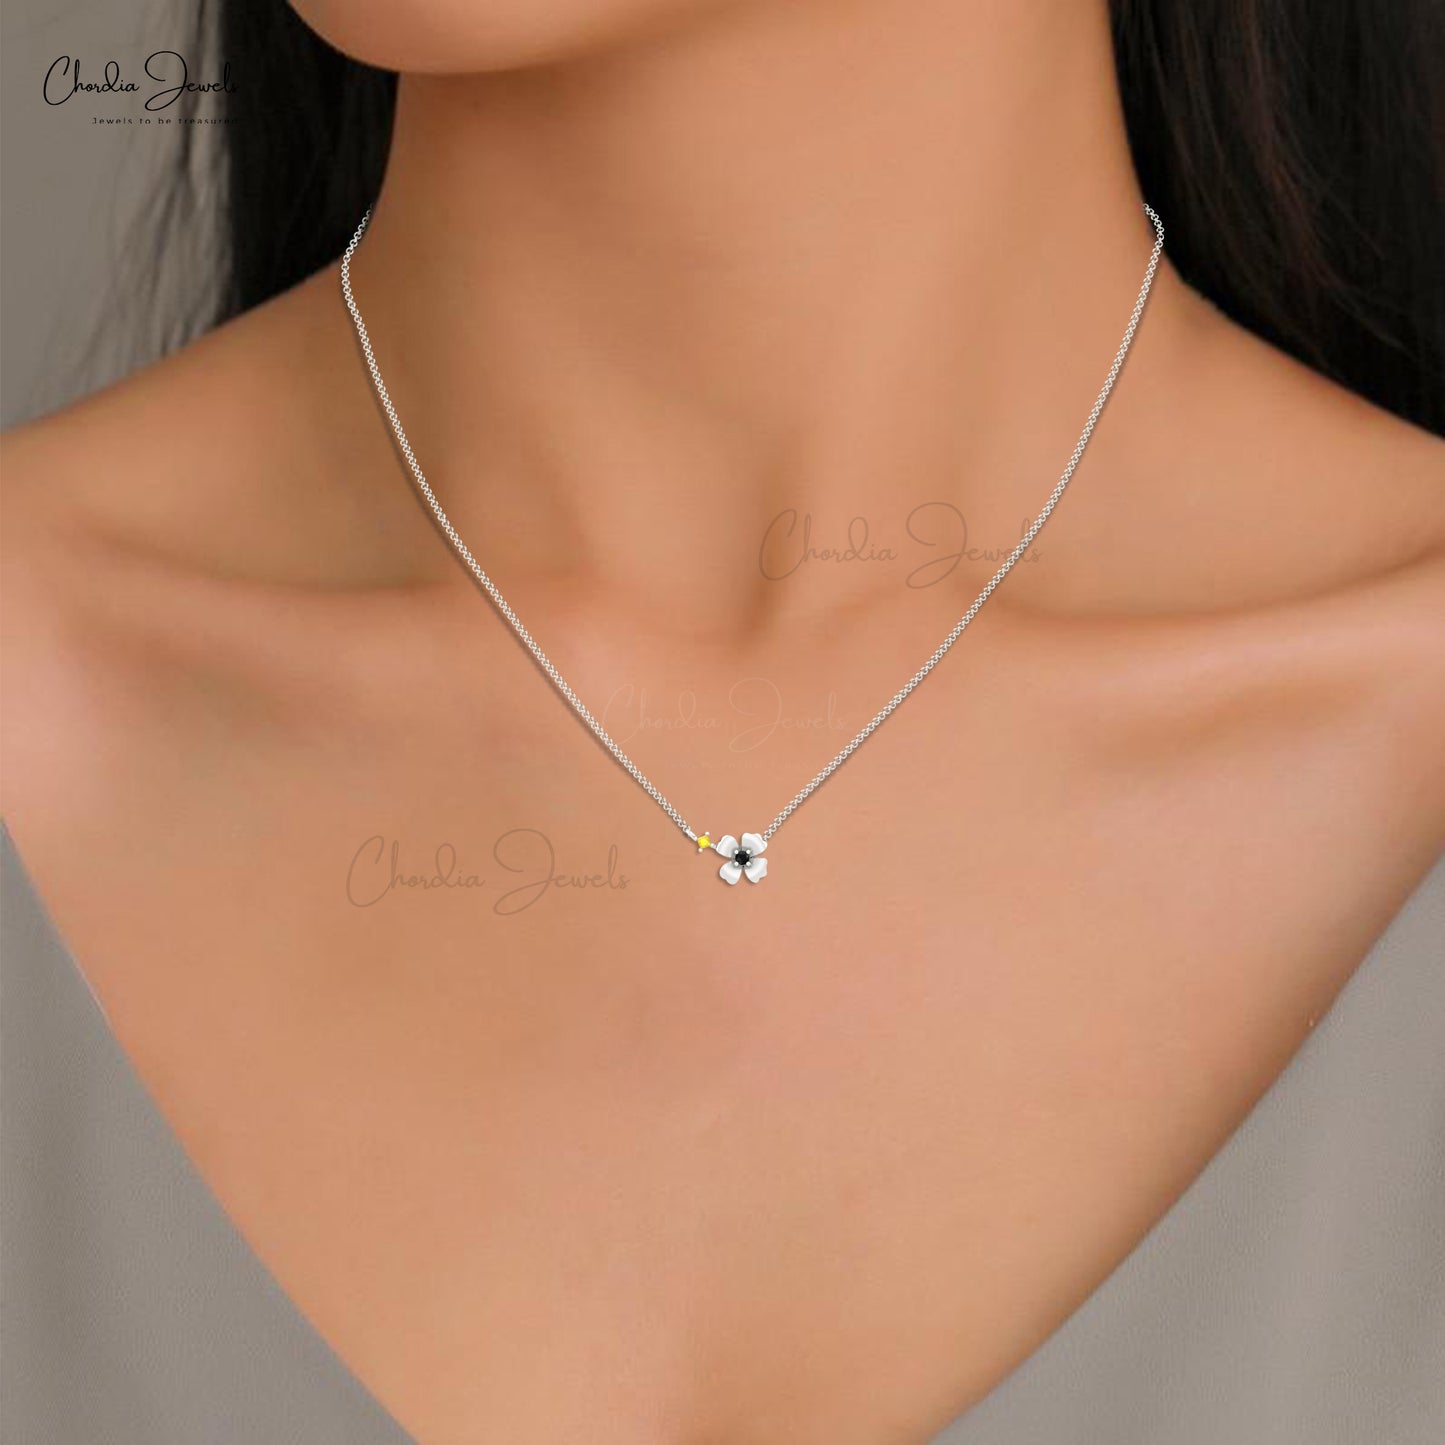 New Exquisite Elegant Square Shape Genuine Yellow Sapphire Gemstone Necklace Pendant 14k Pure Gold Black Diamond Necklace Birthday Gift For Girlfriend